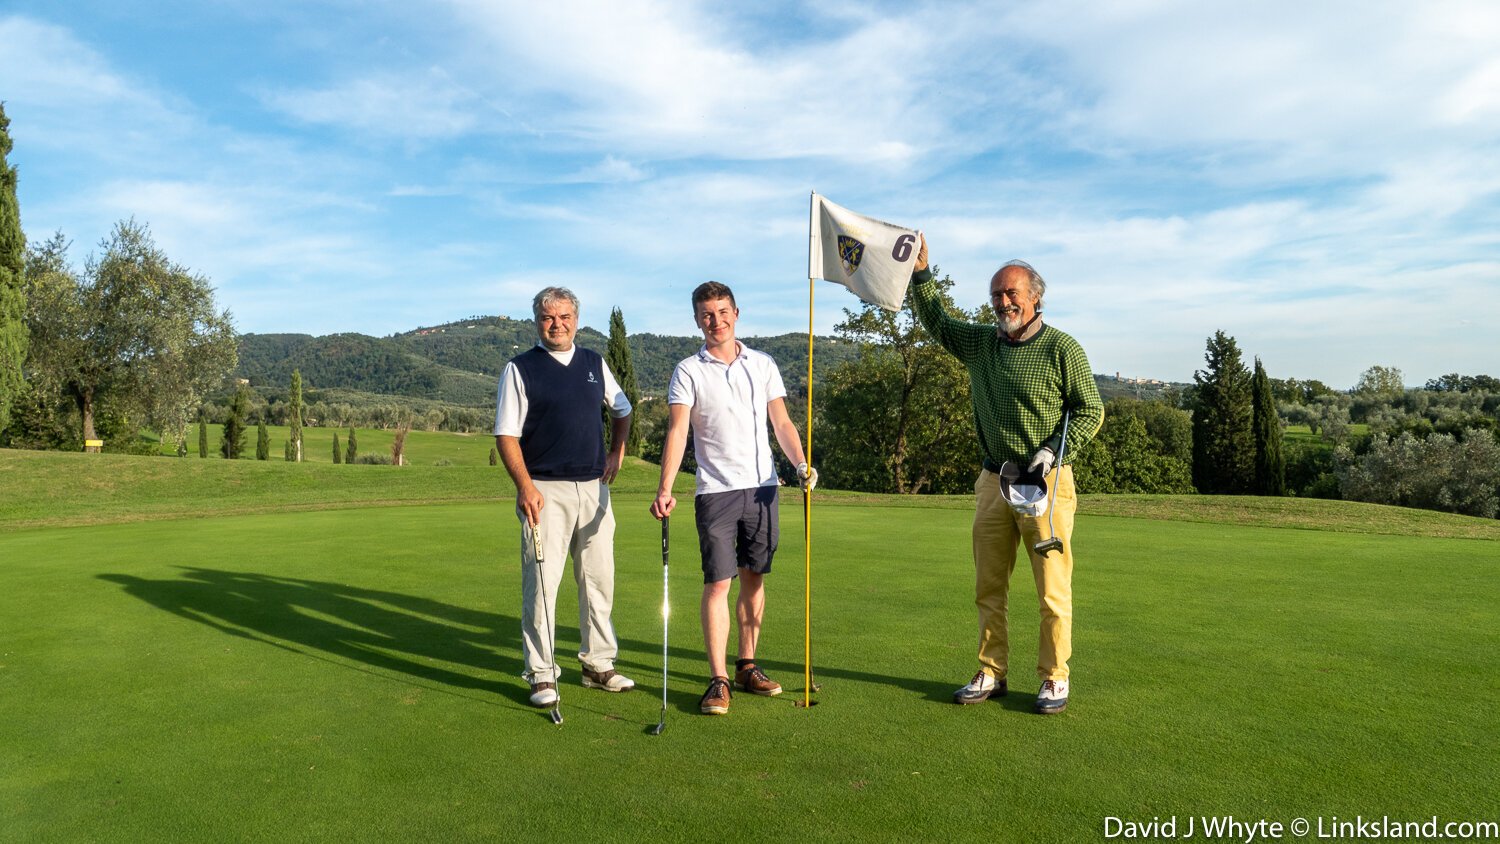 Golf Montecatini Terme, Tuscany, Italy, David J Whyte @ Linksland.com (1 of 1)-5.jpg